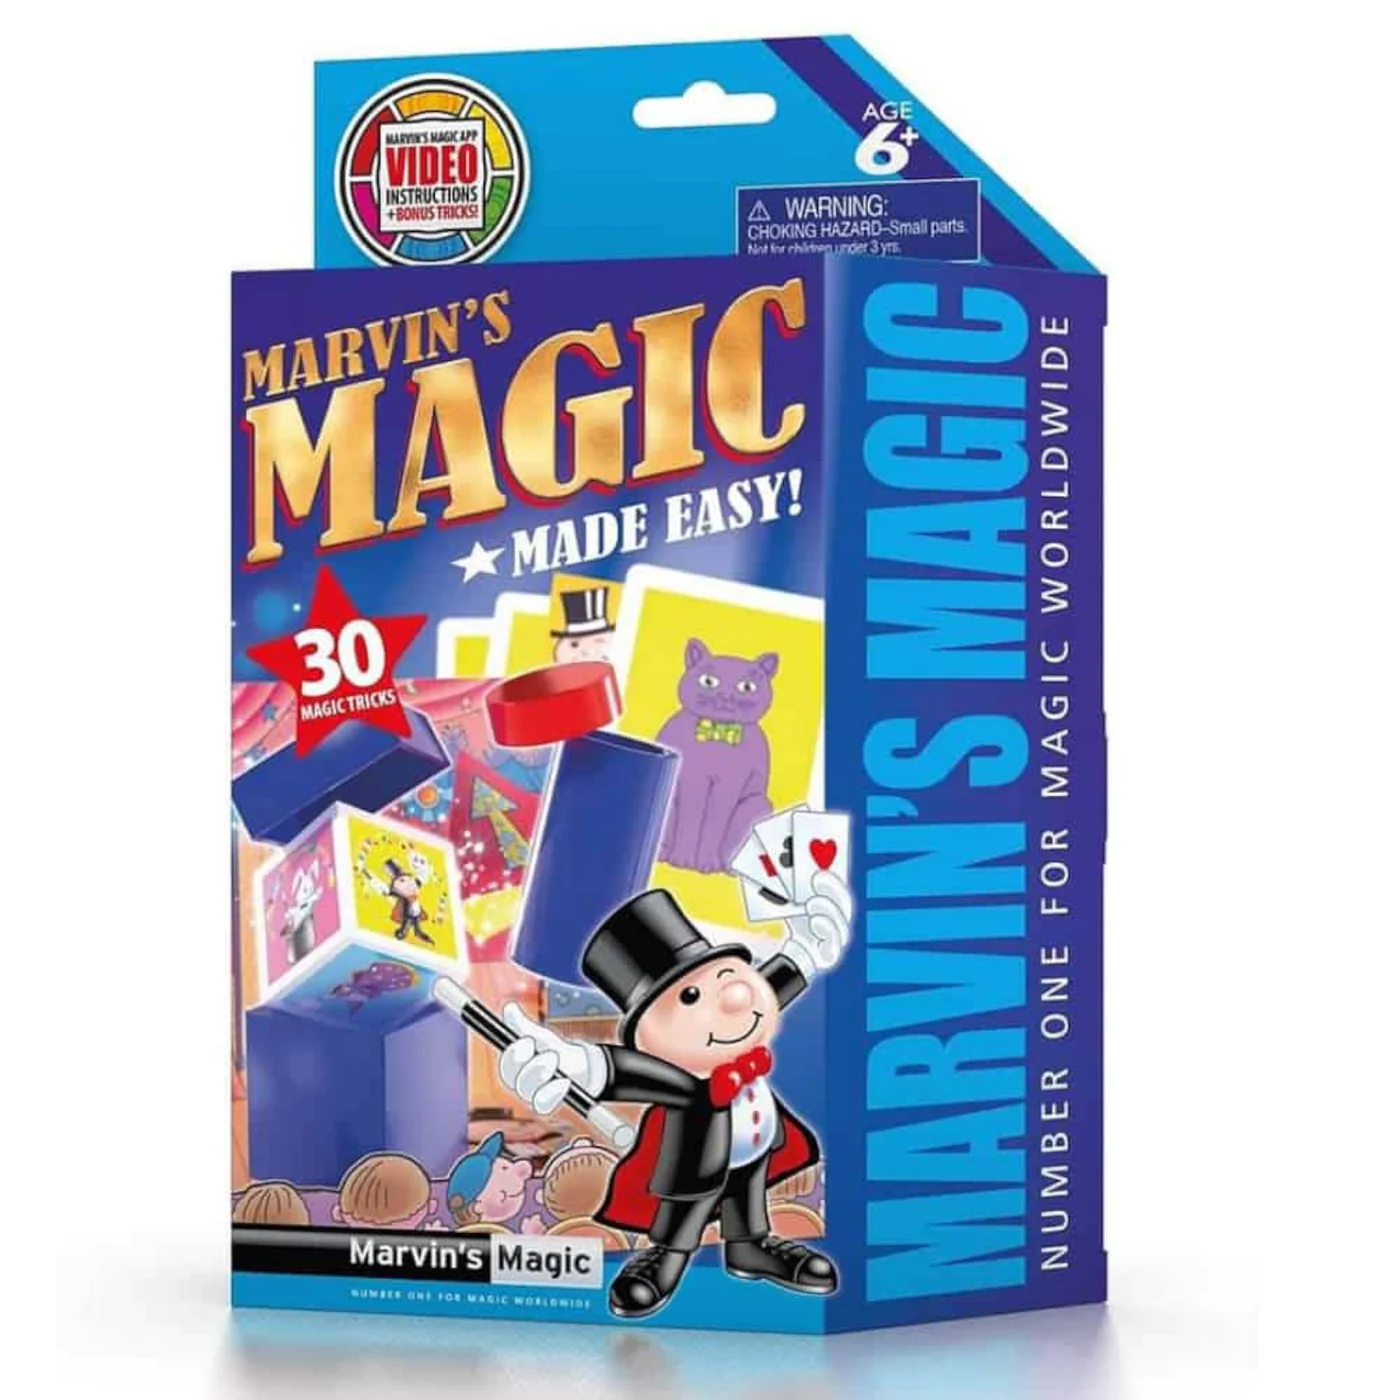 Marvin's Magic 30 Easy Tricks - Blue Box